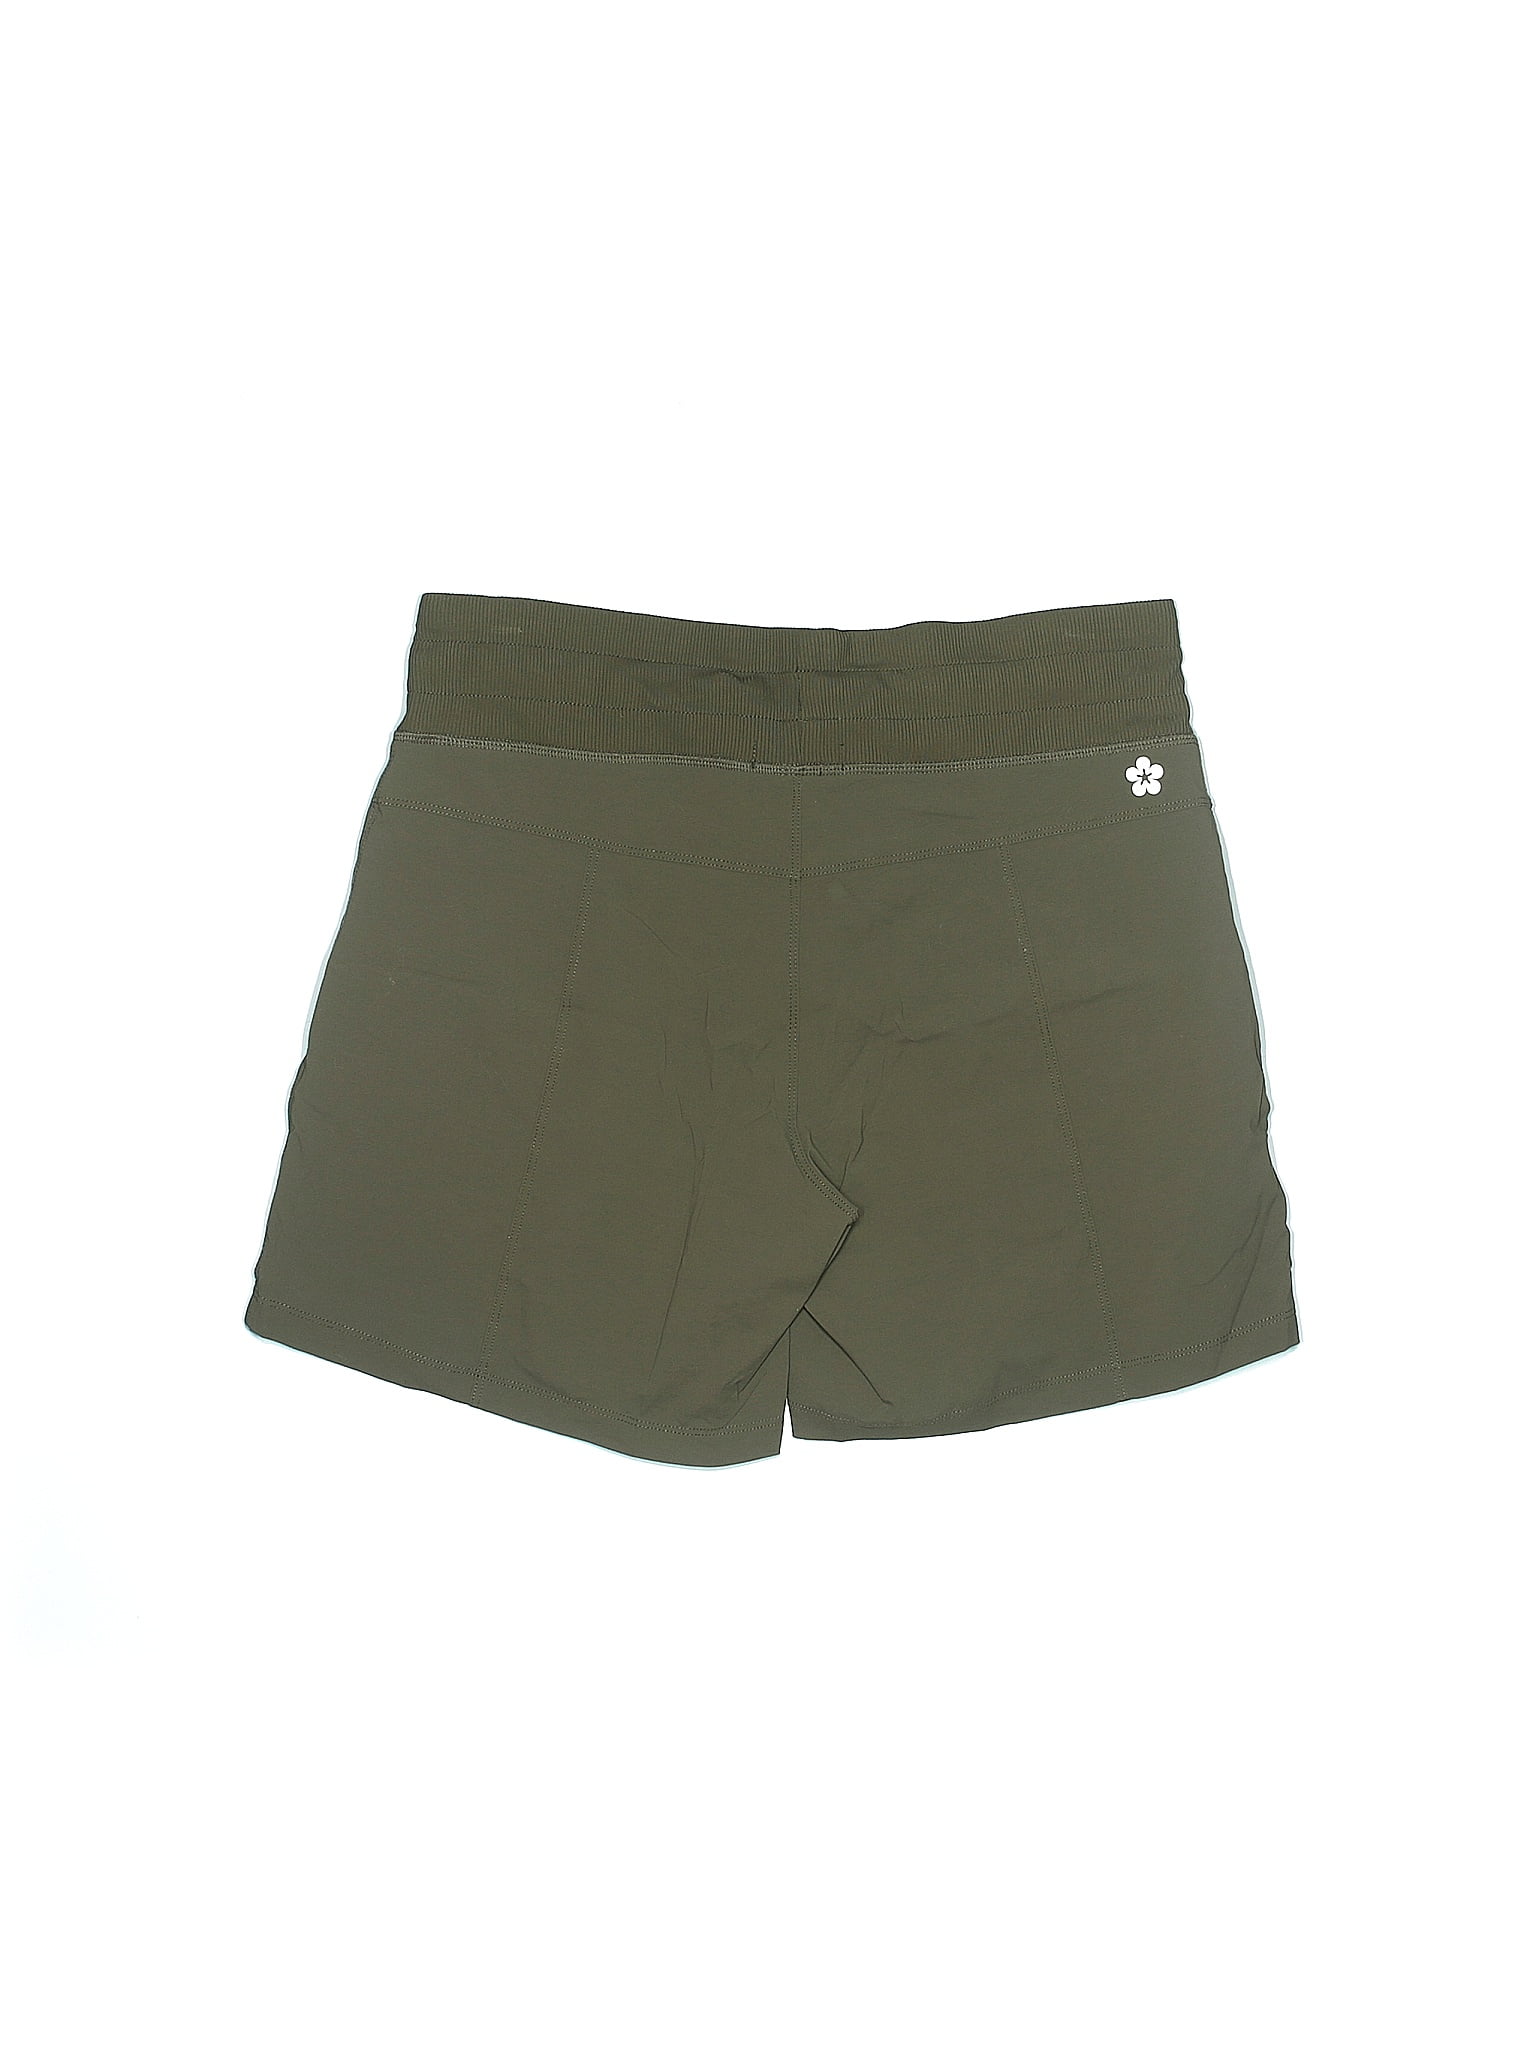 Tuff Athletics Green Athletic Shorts Size M - 56% off